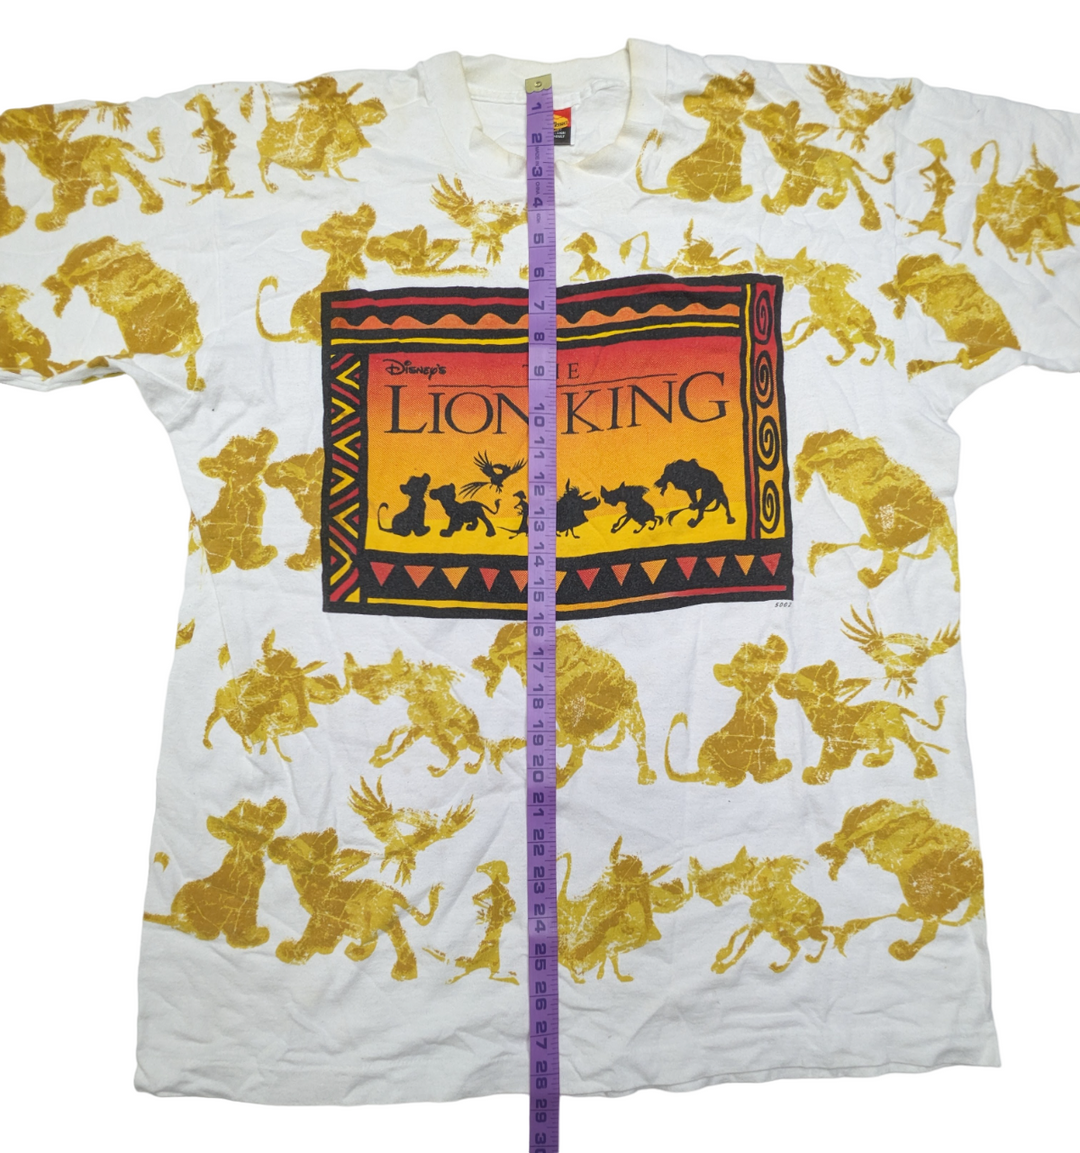 Vintage Disney Jerry Leigh The Lion King T-Shirt 1 pc 1 lb A0418211